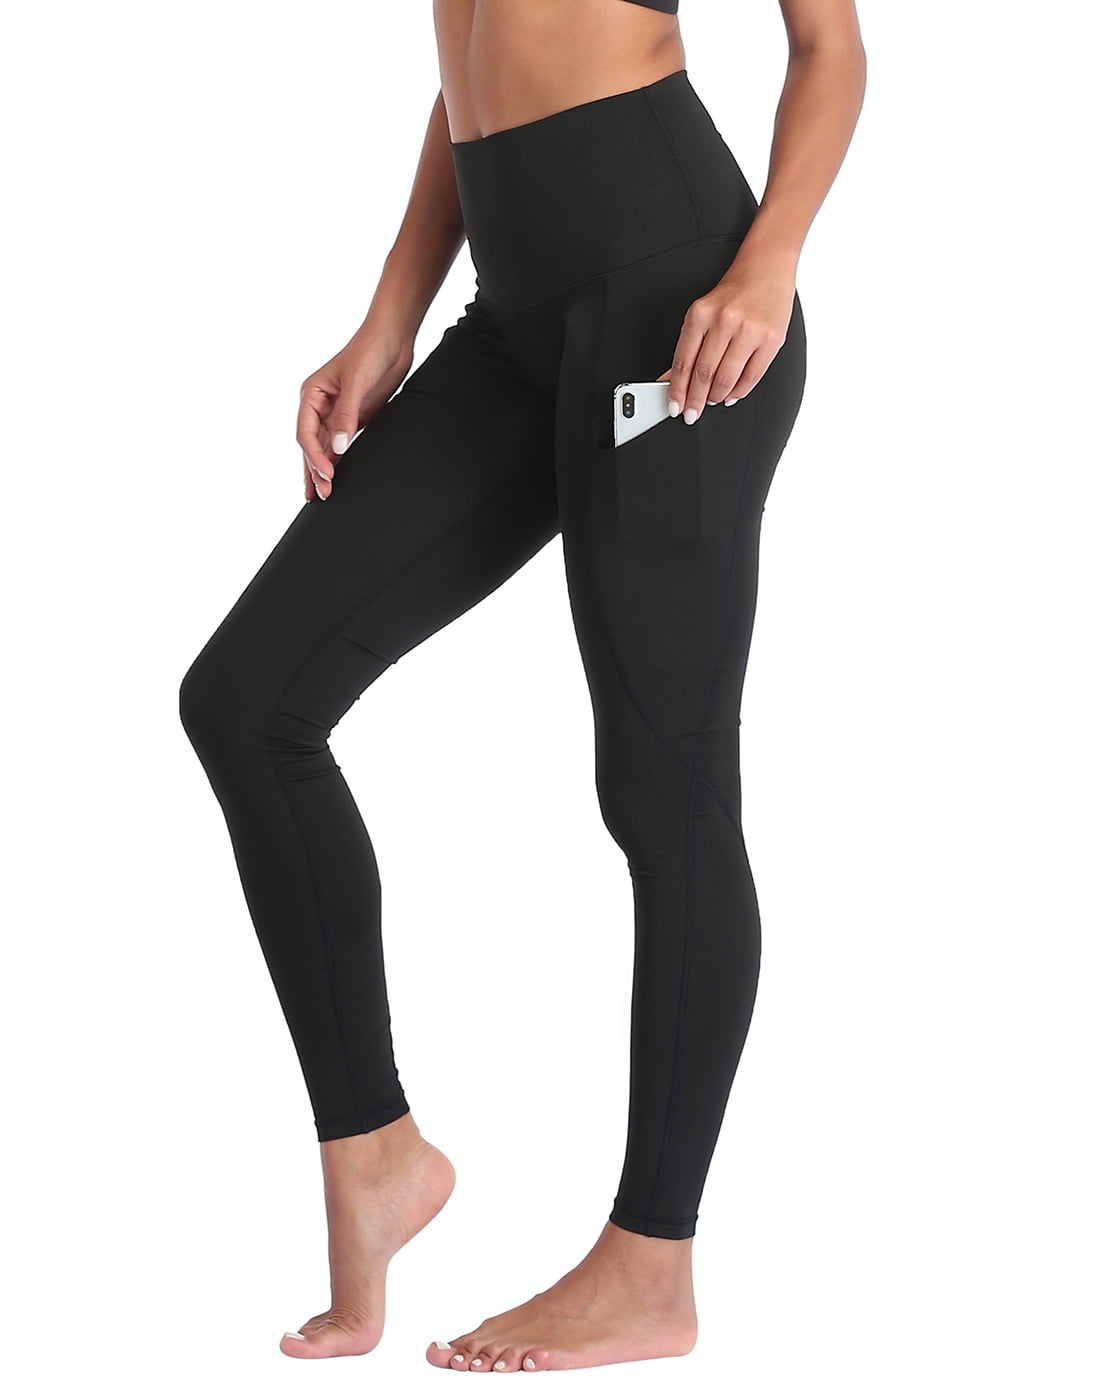 Girl Blue Air Black Cat Yoga Pants Super Soft Yoga Leggings with Pockets 